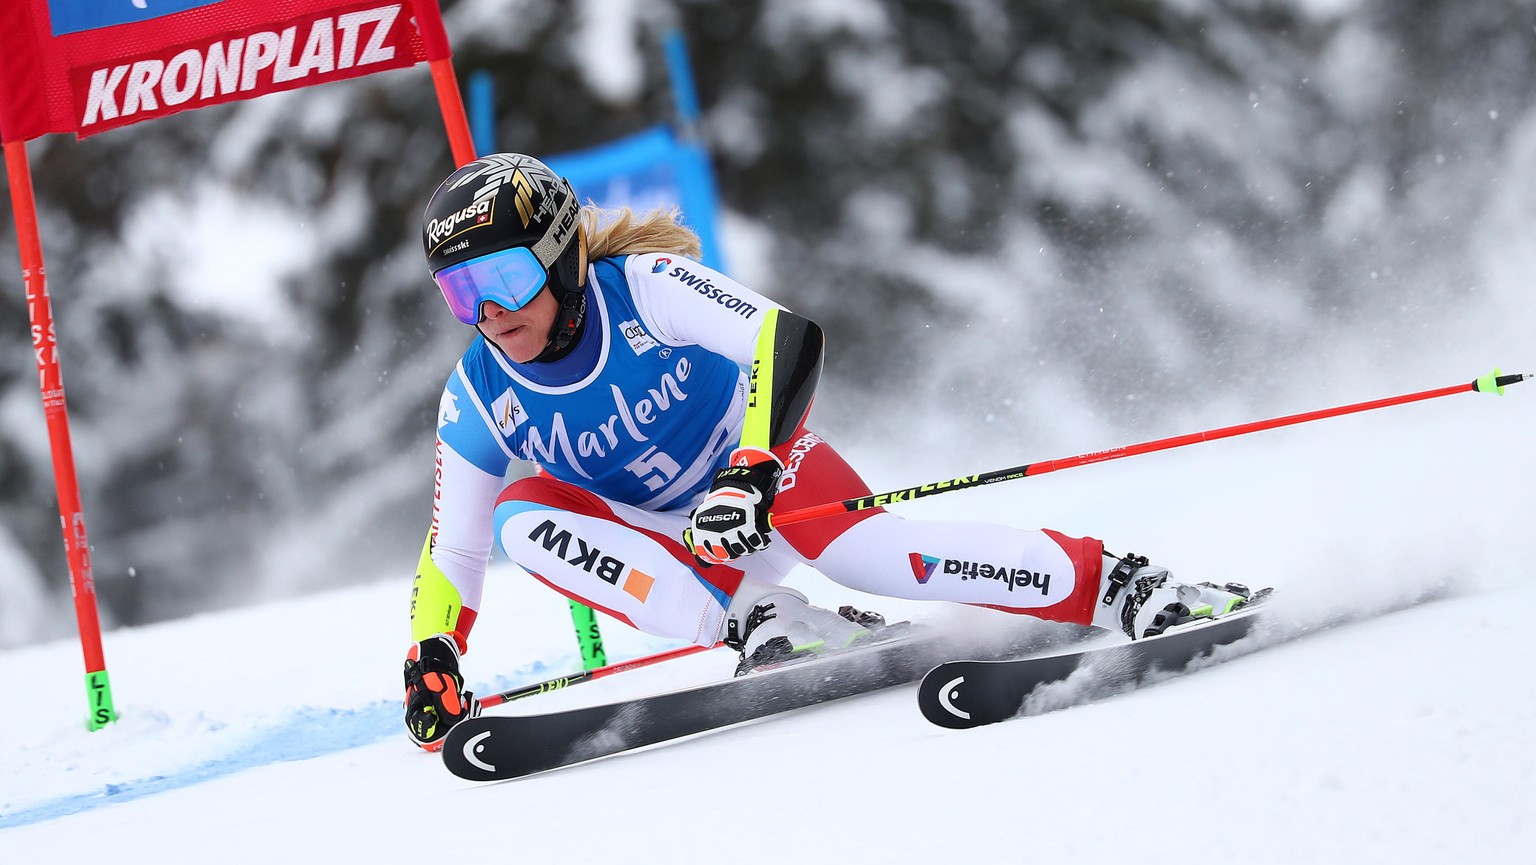 epa08966247 Lara Gut-Behrami of Switzerland in action during the Women&#039;s Giant Slalom race at the FIS Alpine Skiing World Cup in Kronplatz, Italy, 26 January 2021. EPA/ANDREA SOLERO